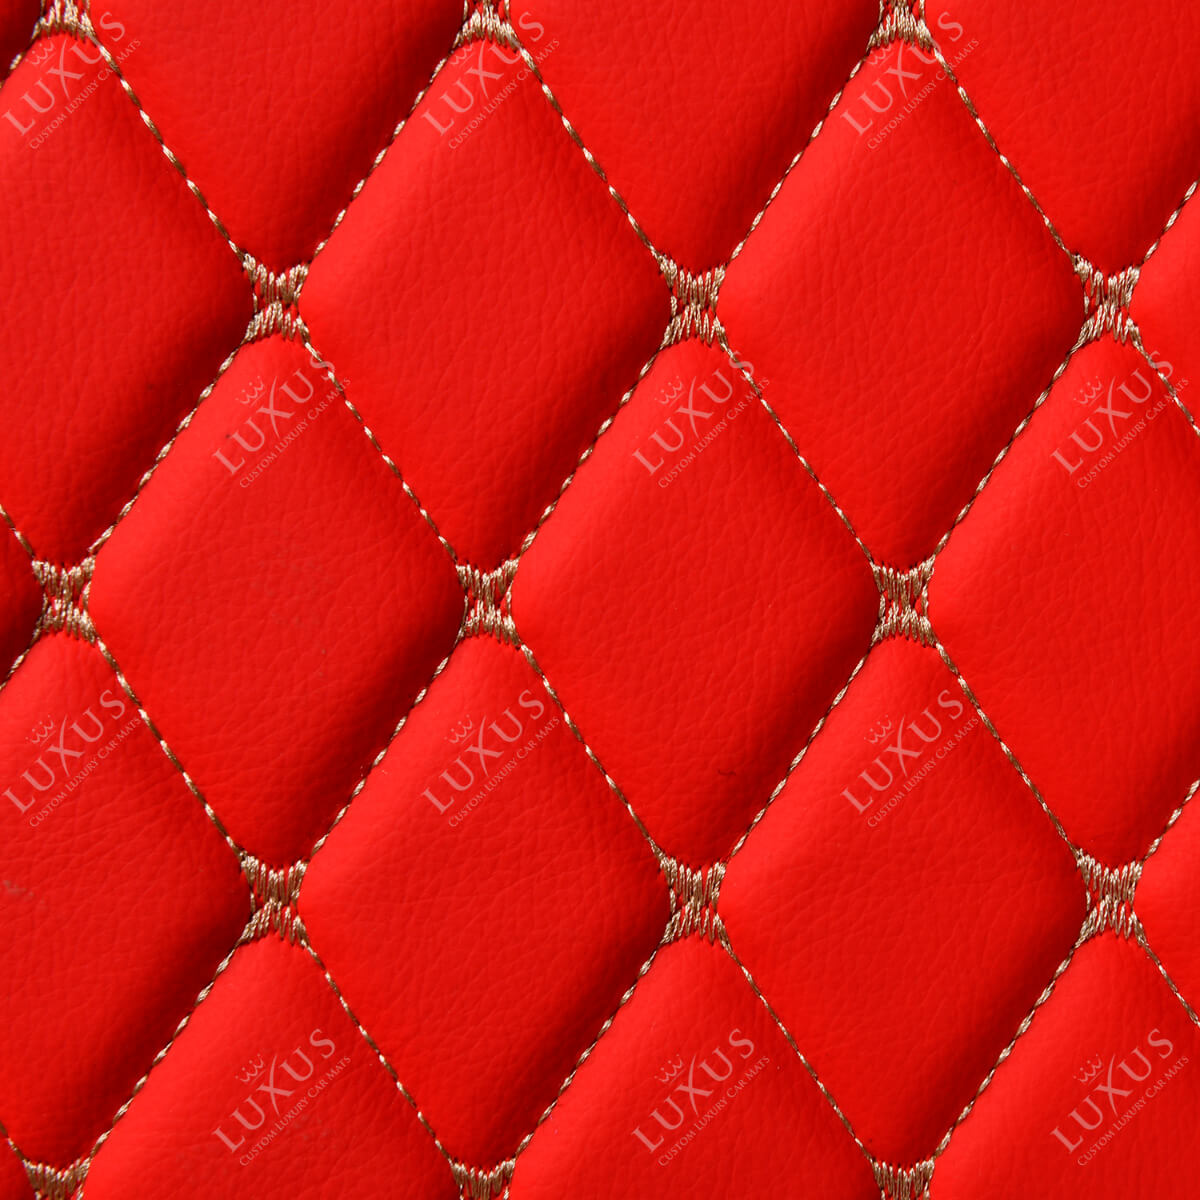 Luxus-Fußmatten-Set Ferrari Rot